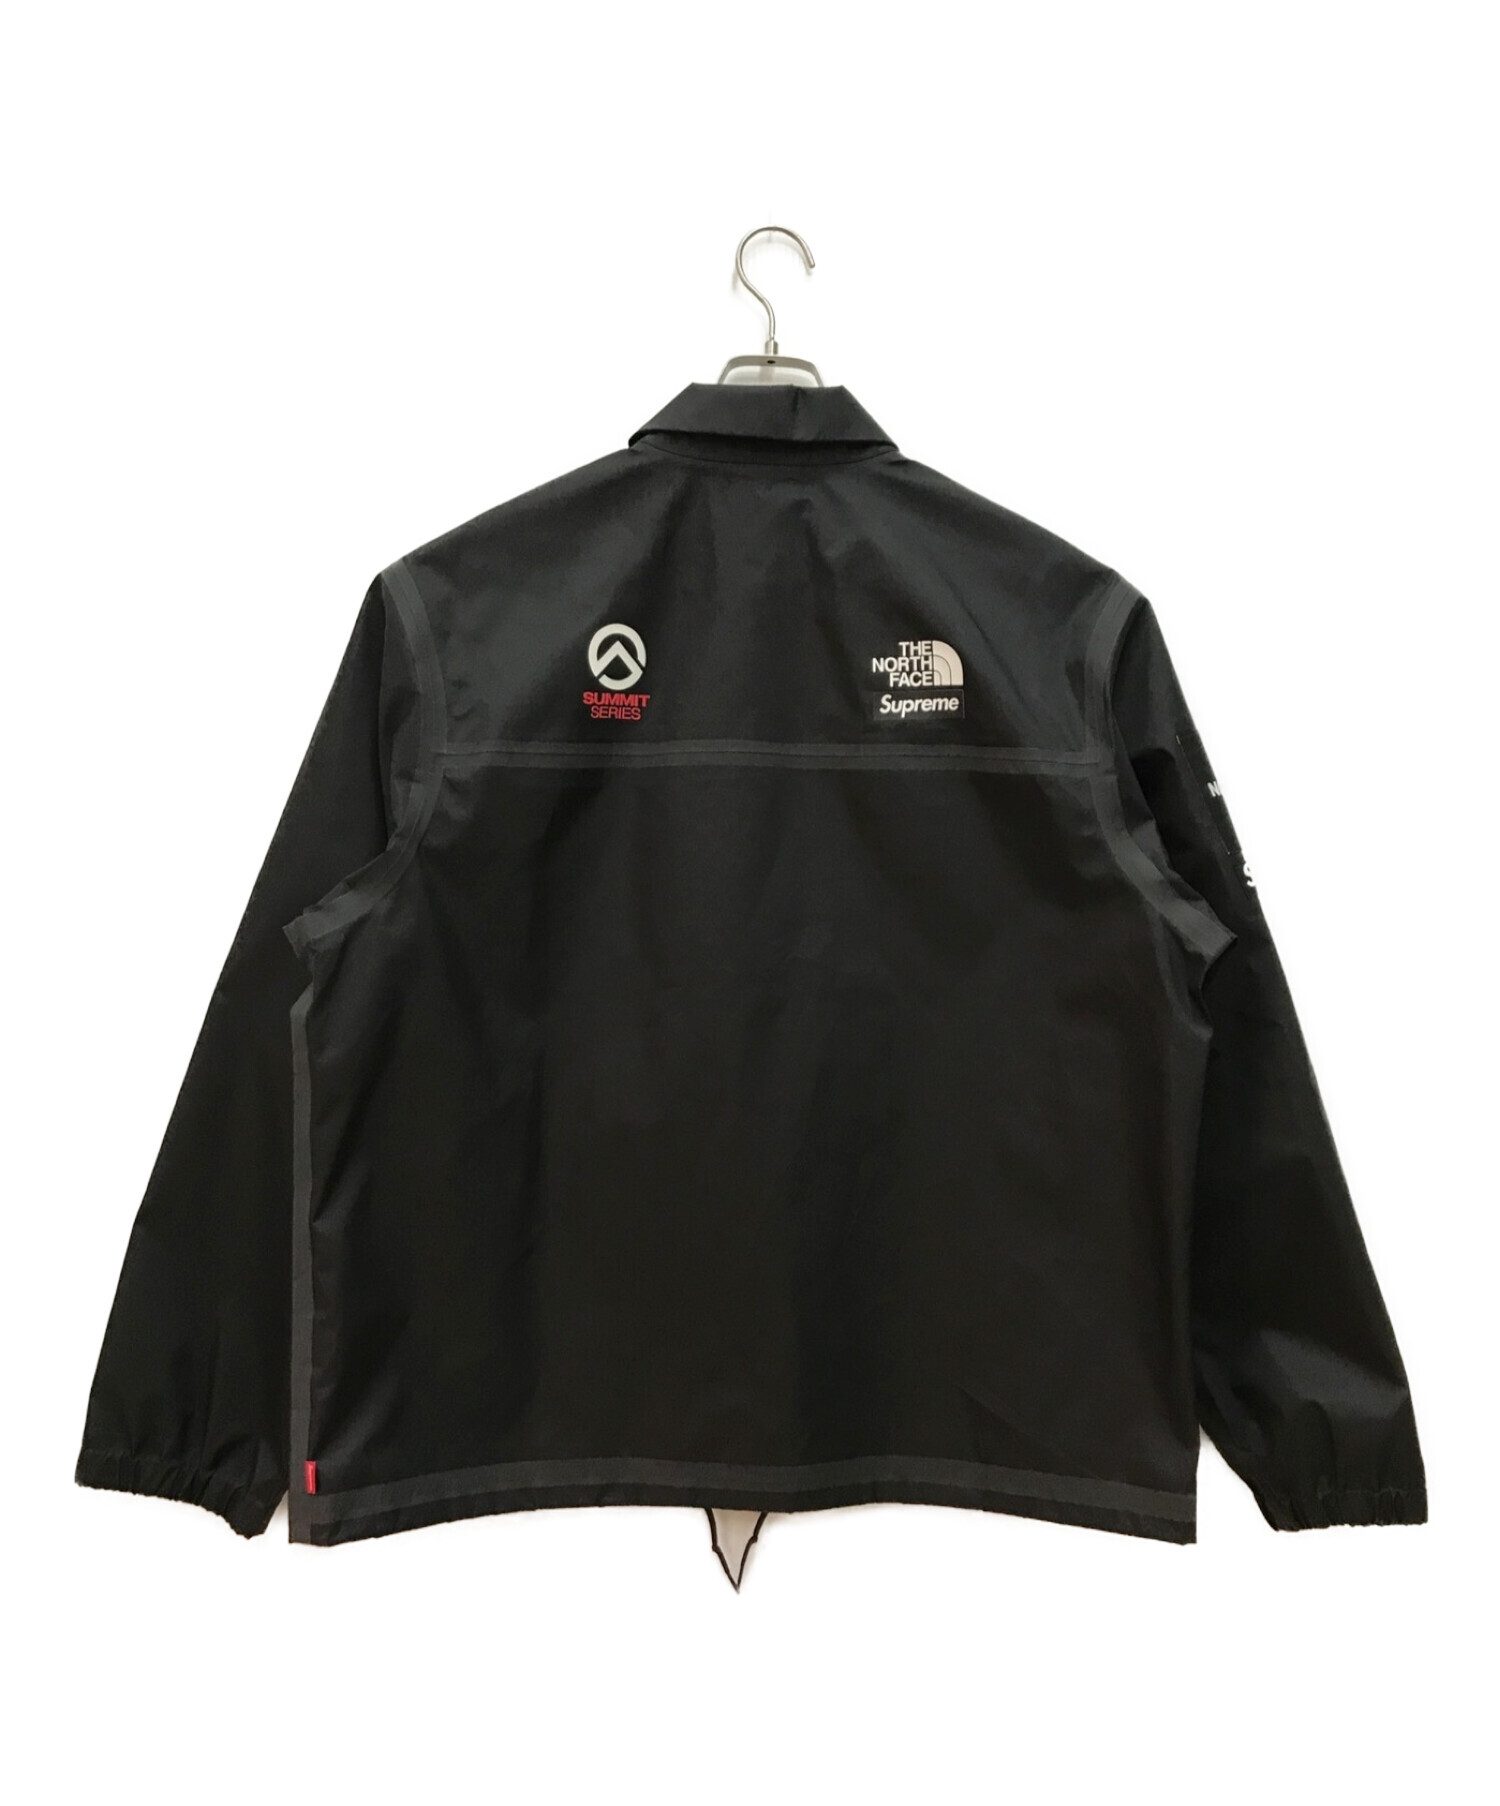 SUPREME×THE NORTH FACE (シュプリーム × ザノースフェイス) Outer Tape Seam Coaches Jacket  ブラック サイズ:L